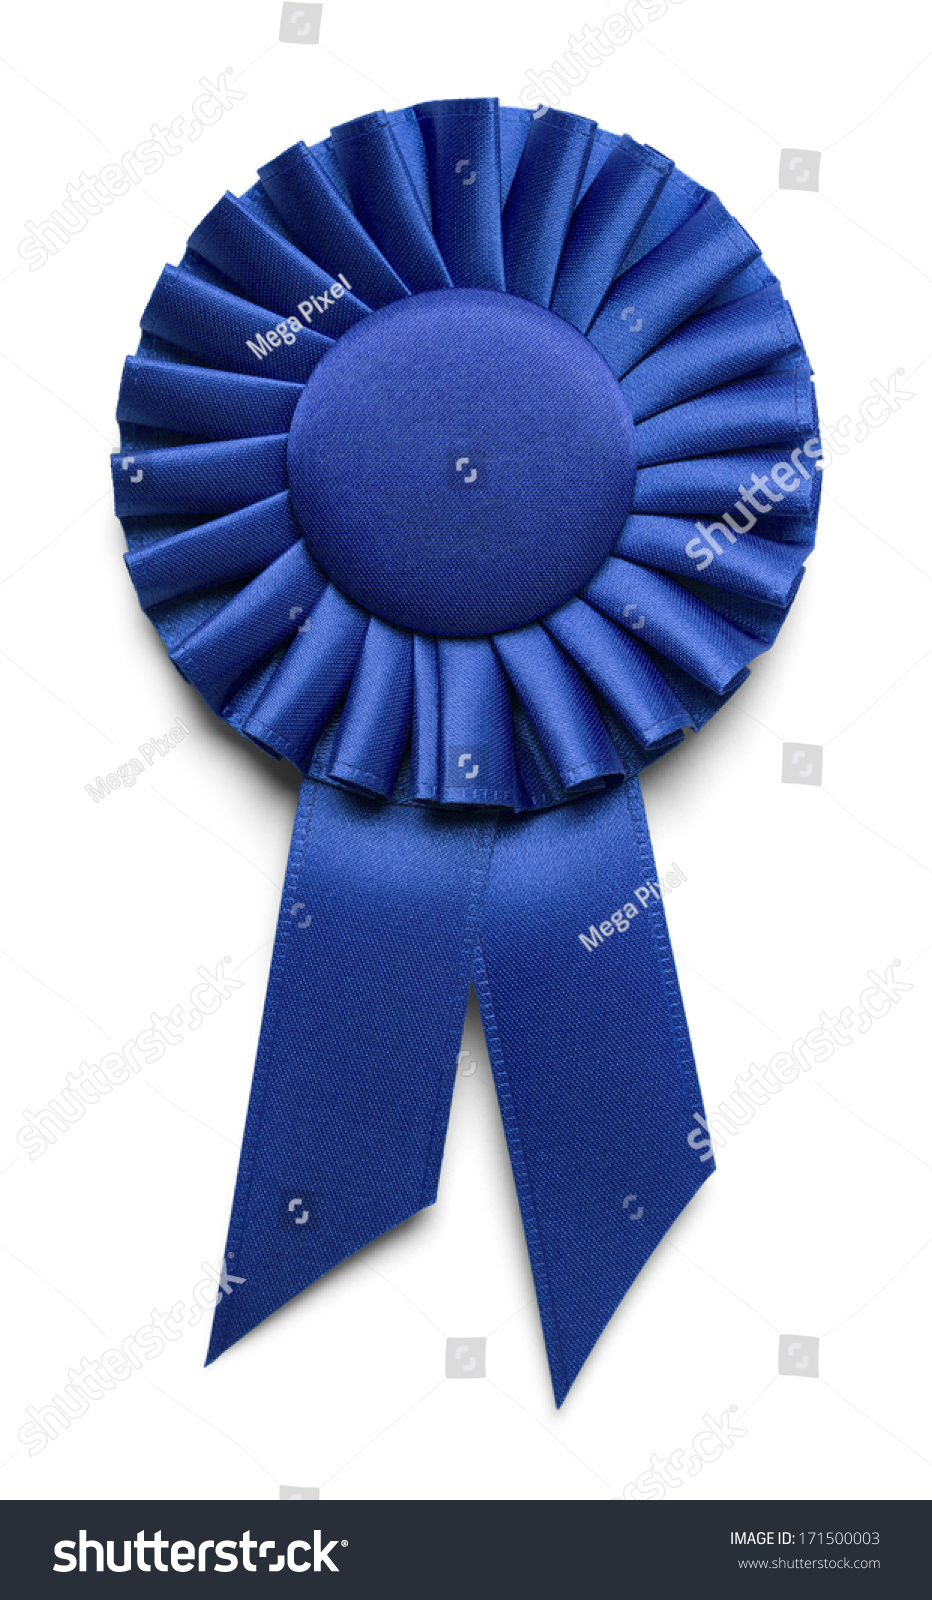 blue-fabric-award-ribbon-copy-space-stock-photo-171500003-shutterstock